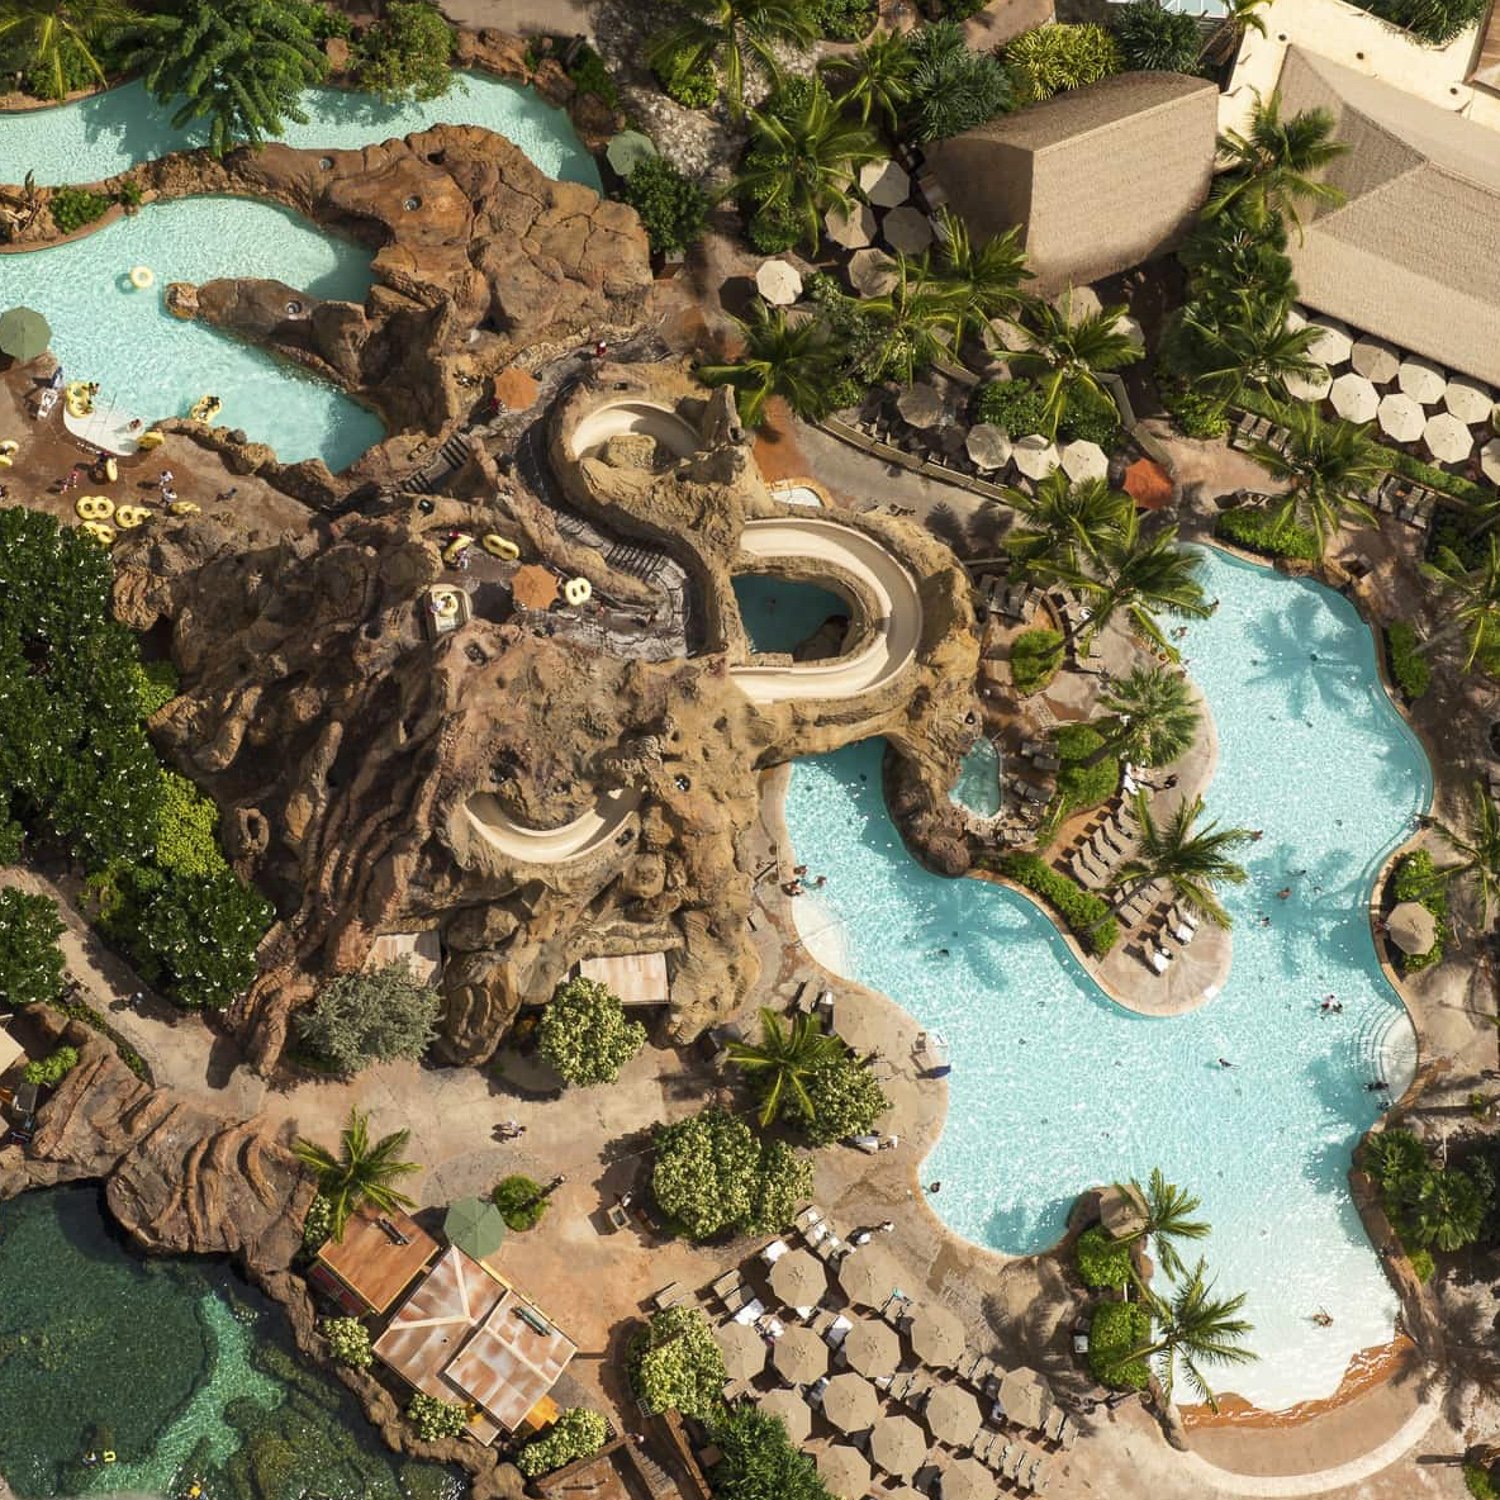 The World’s Best Disney Hotel Swimming Pools